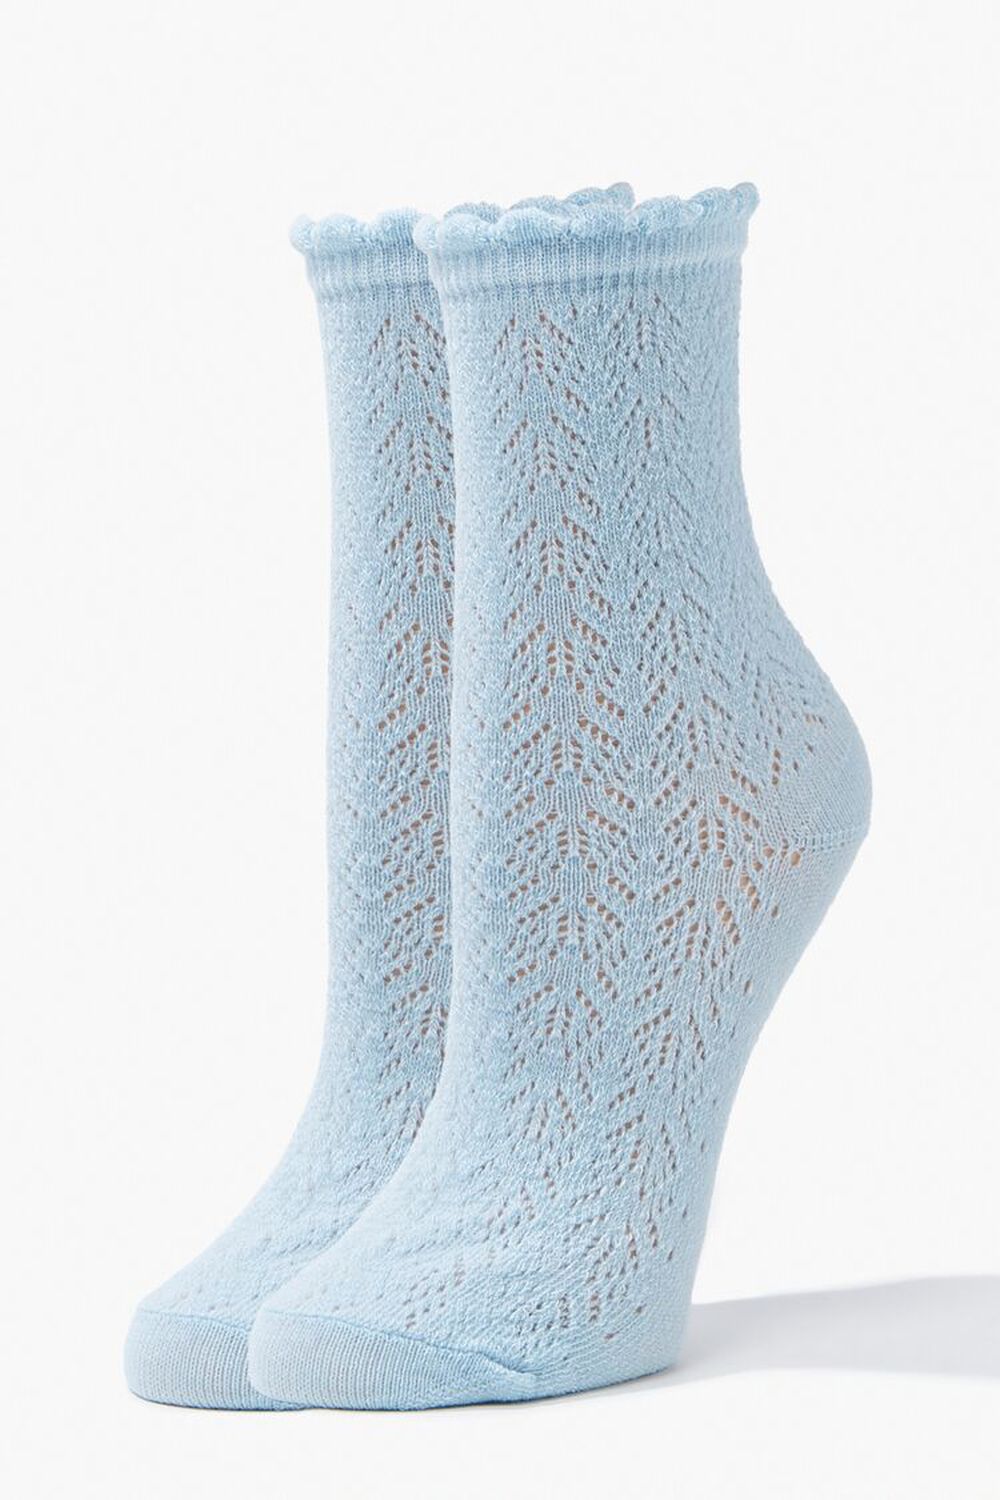 BLUE Lace Knit Crew Socks, image 1